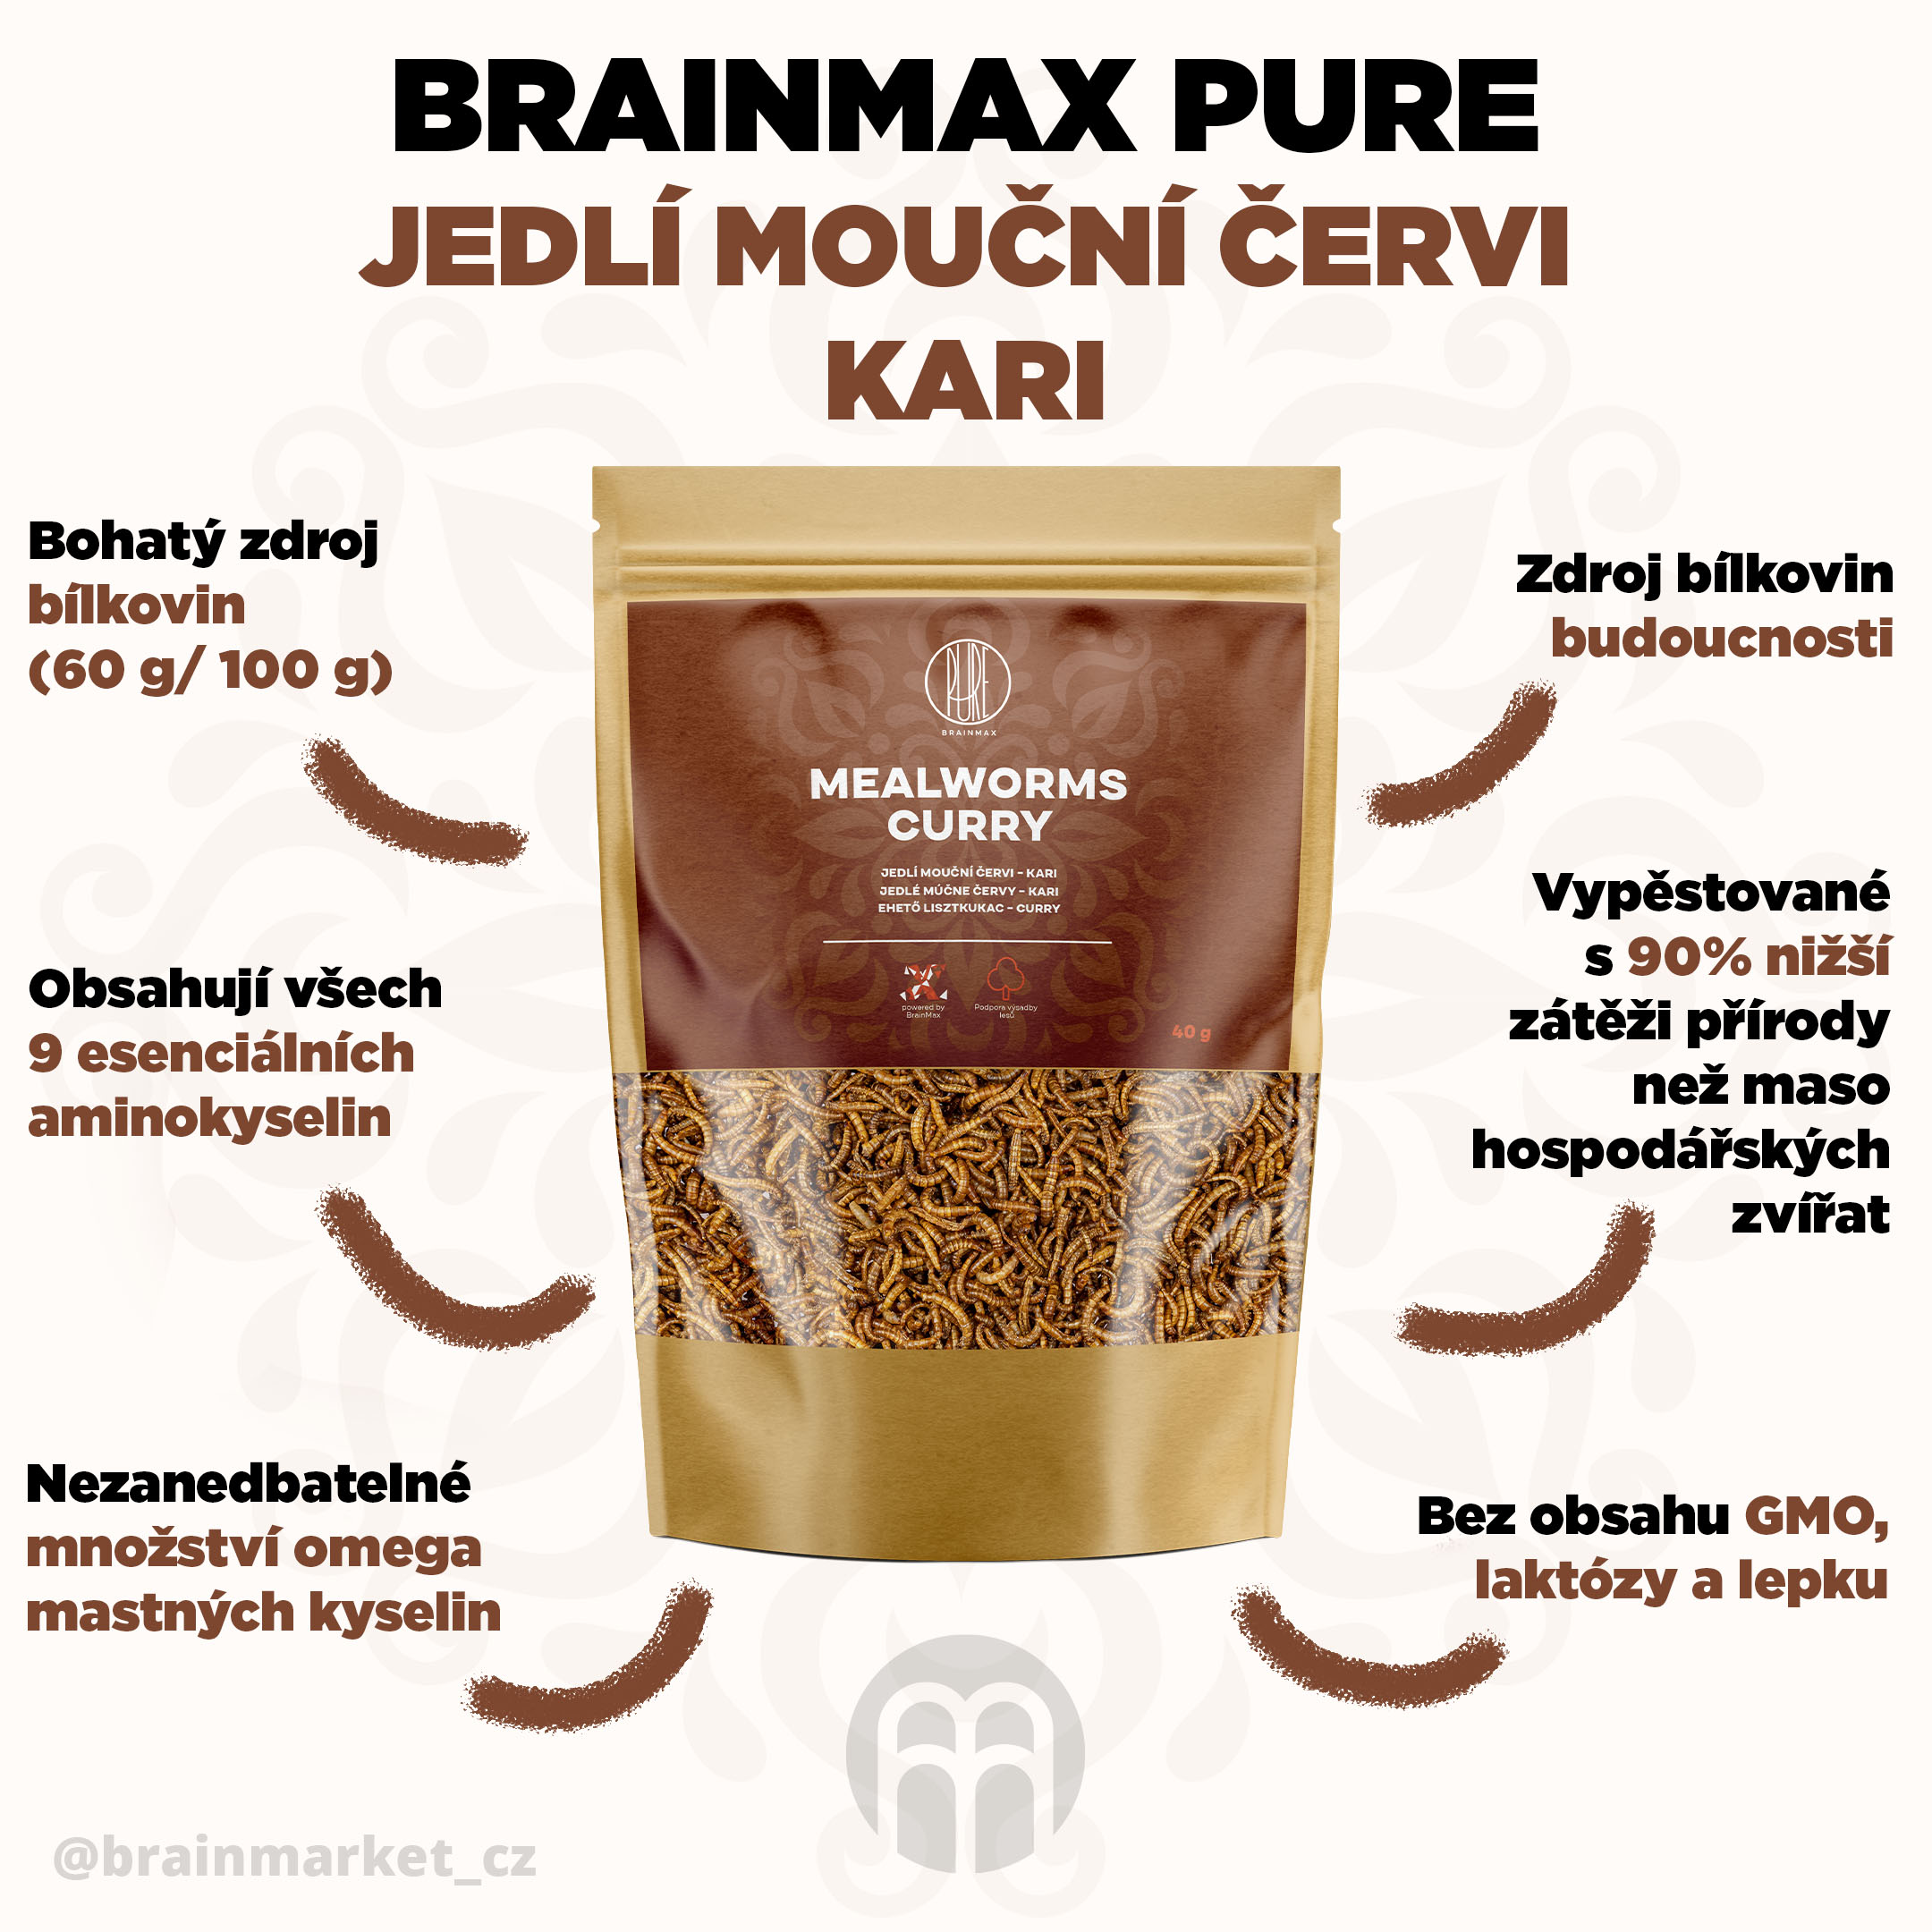 brainmax pure cervi kari infografika brainmarket CZ